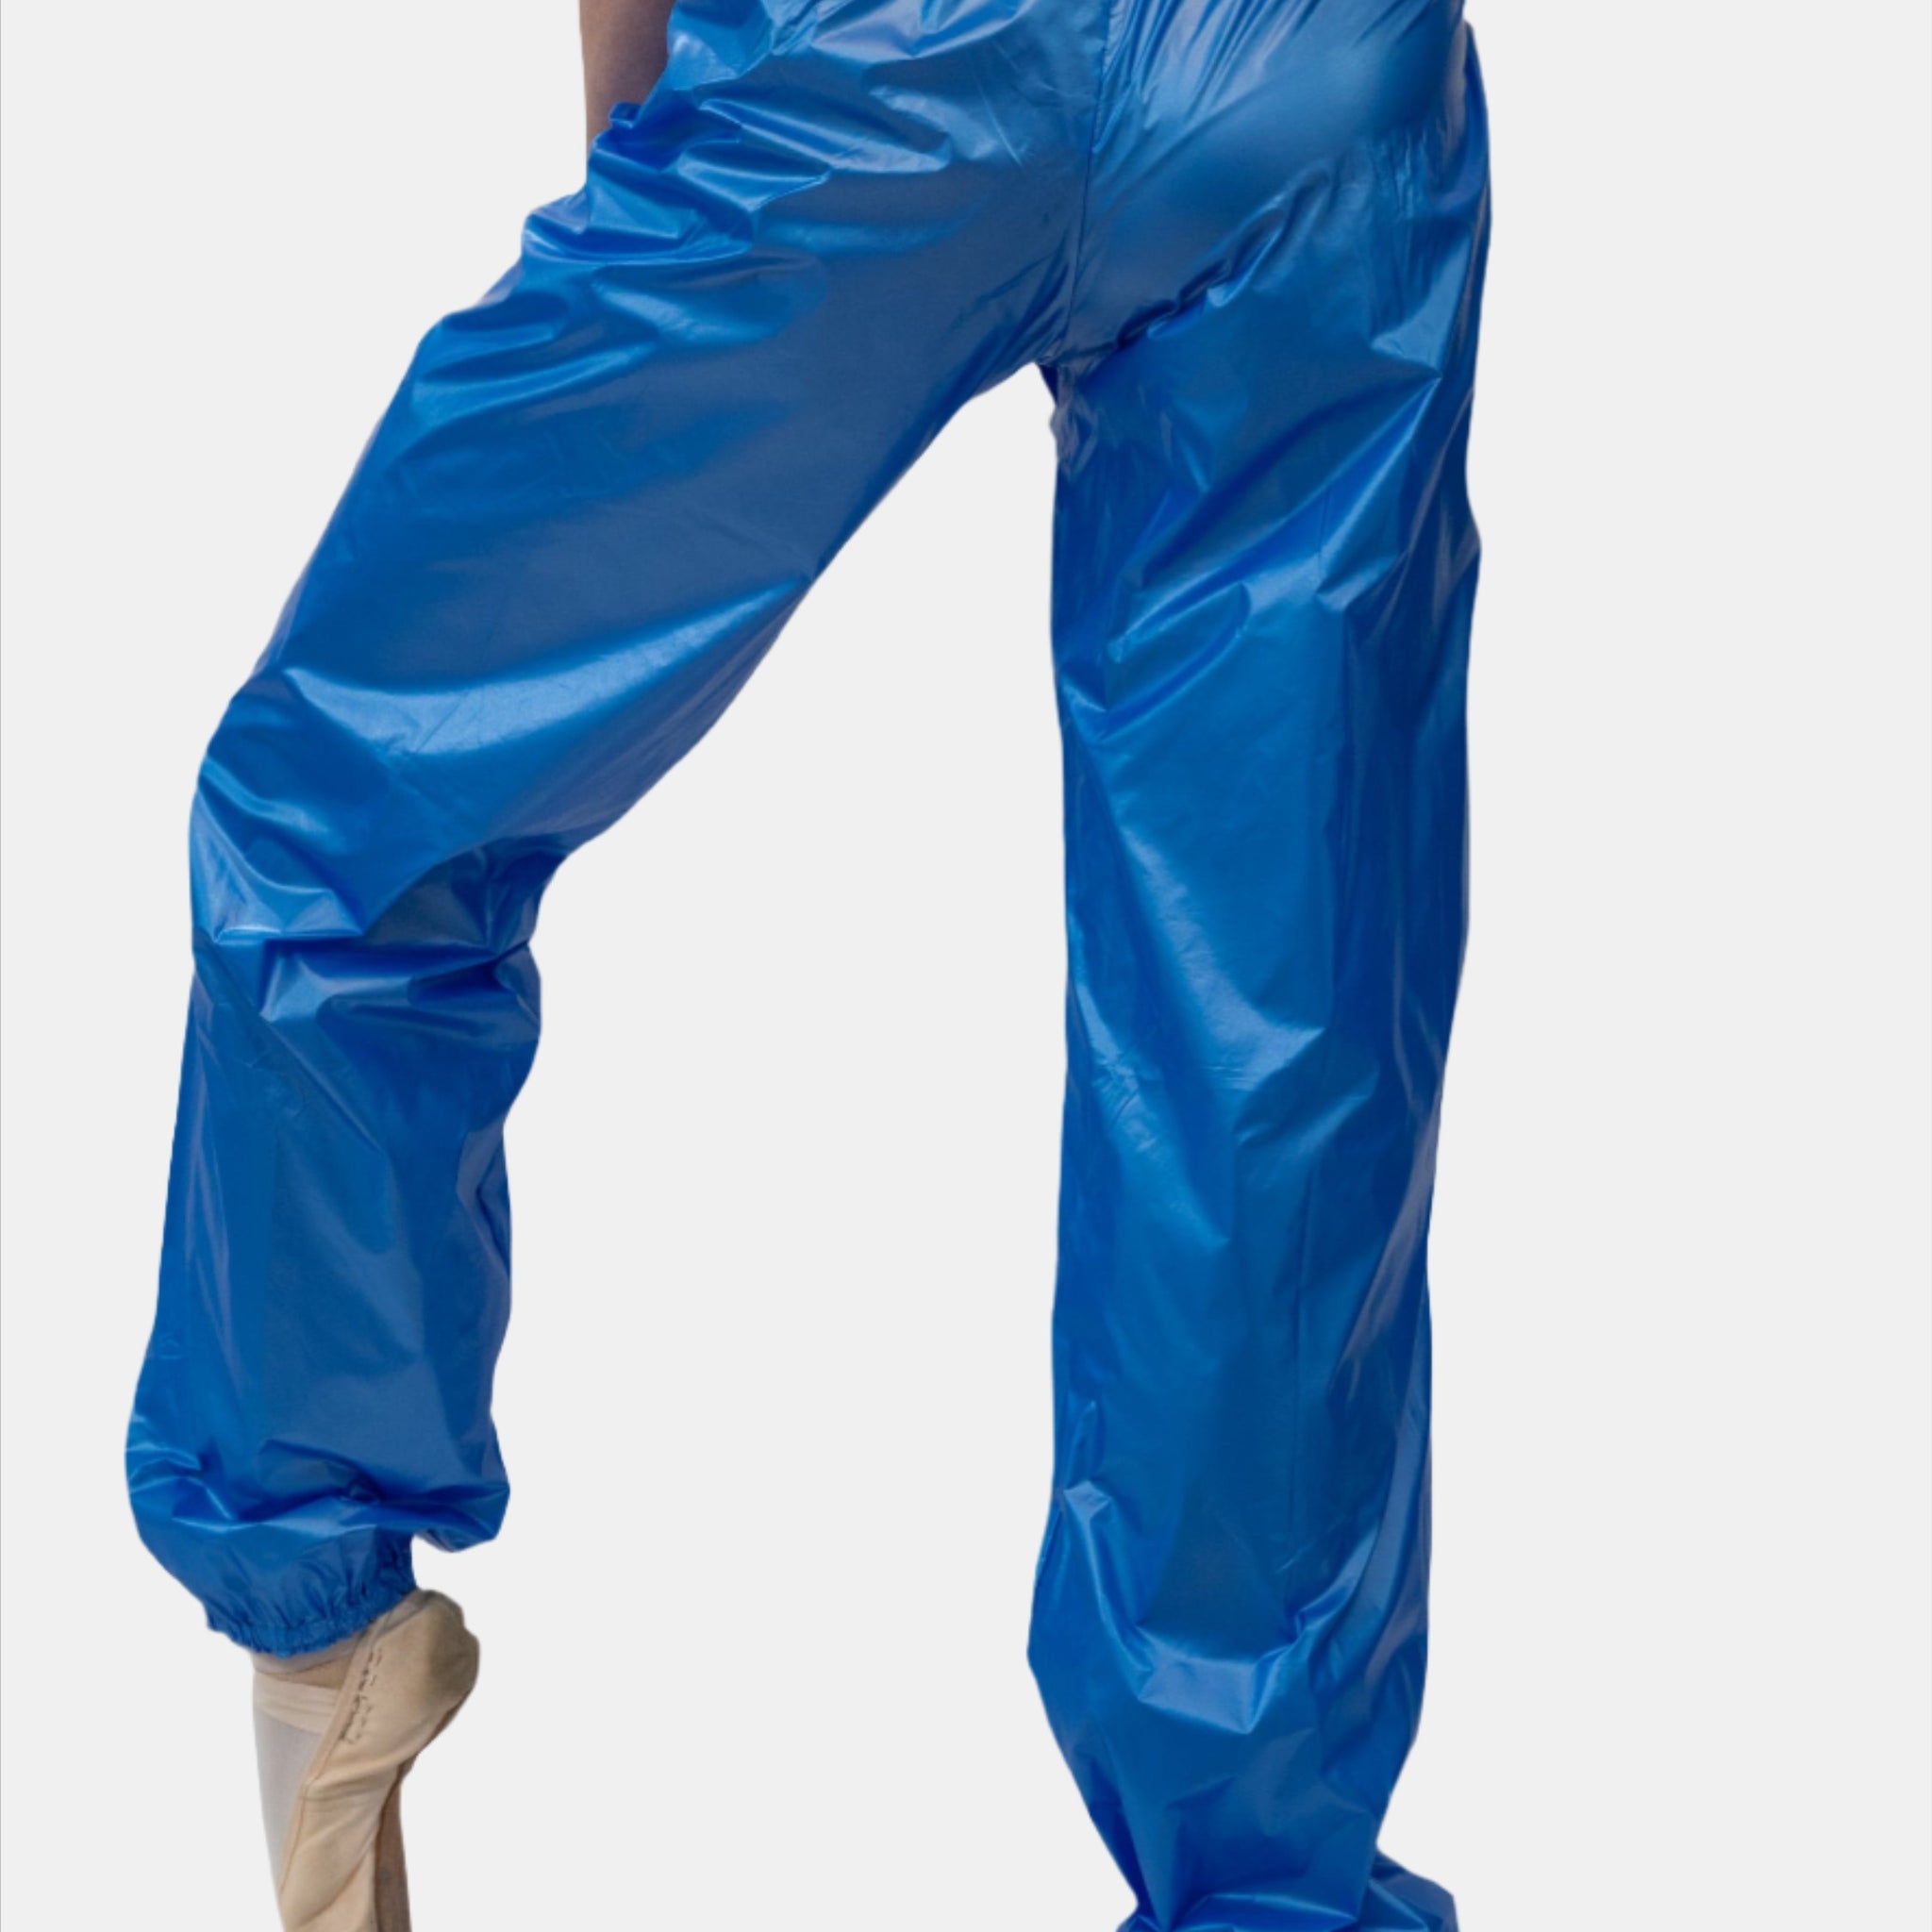 Sky Blue Warm-Up Dance Trash Bag Pants MP5003 - Atelier della Danza MP